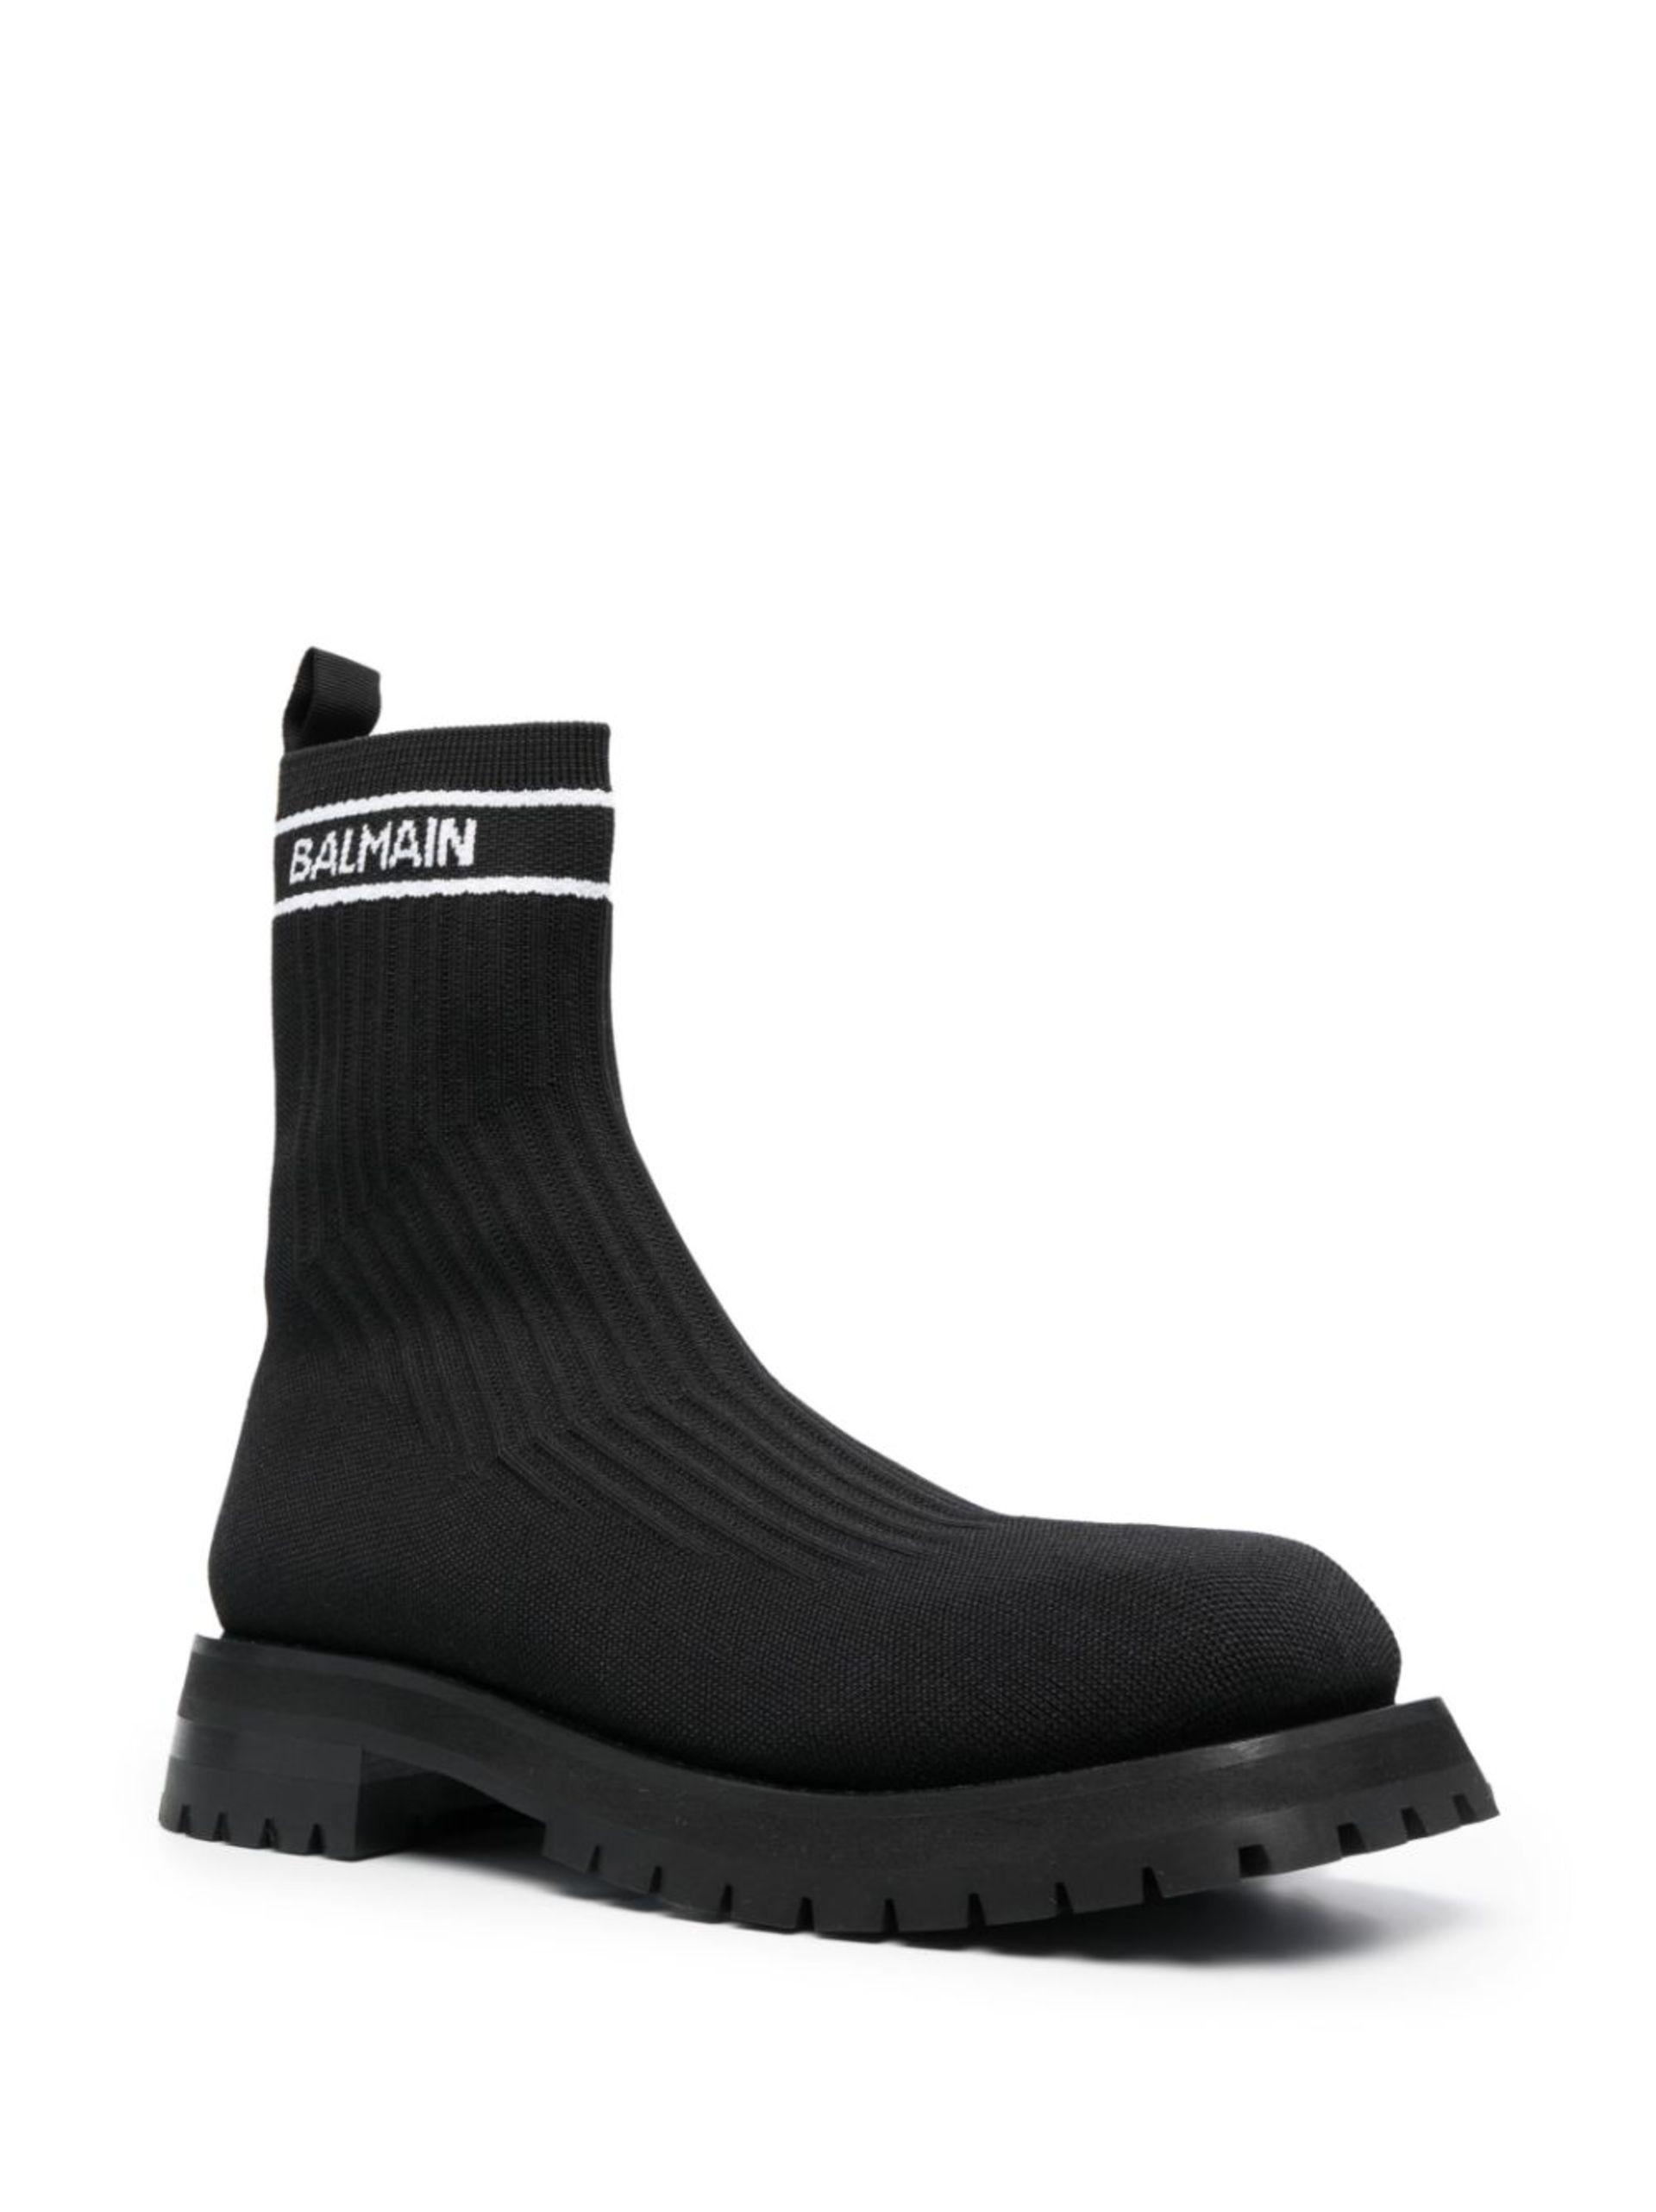 Balmain Sock Ankle Boots in Black for Men | Lyst